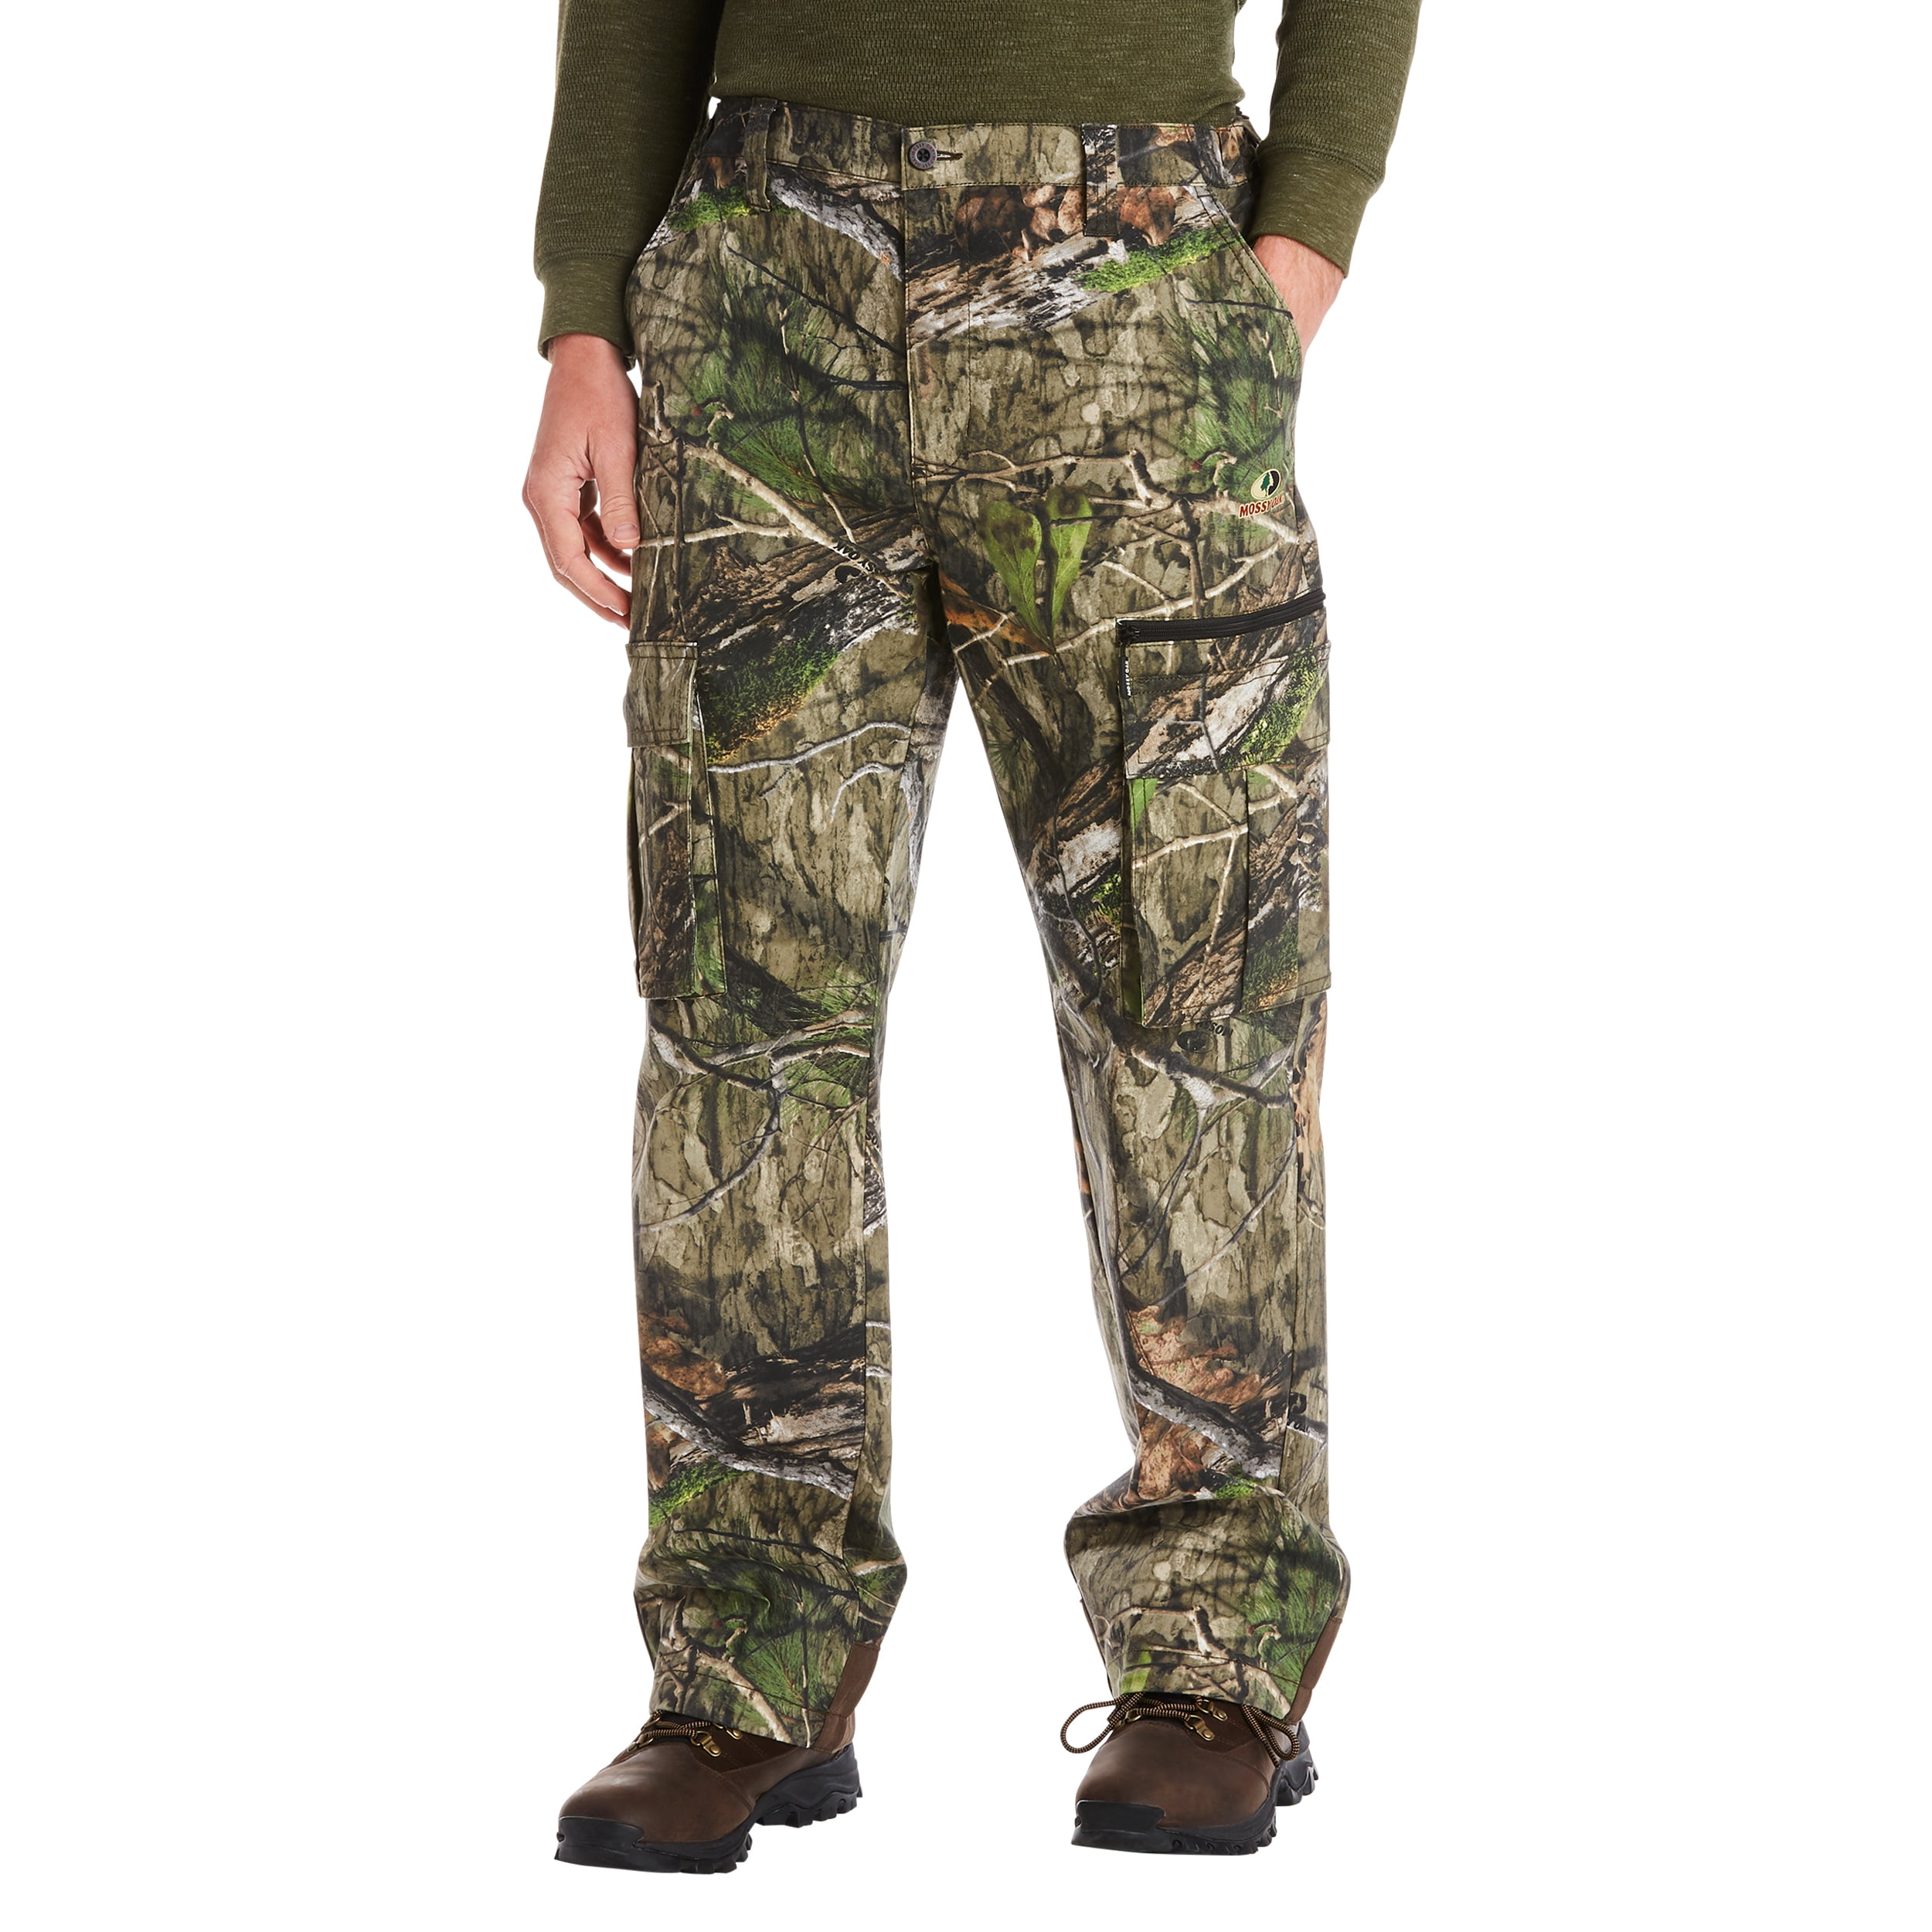 Mossy Oak Tibbee Camo Cargo Shorts for Men in Multiple Camo Patterns 